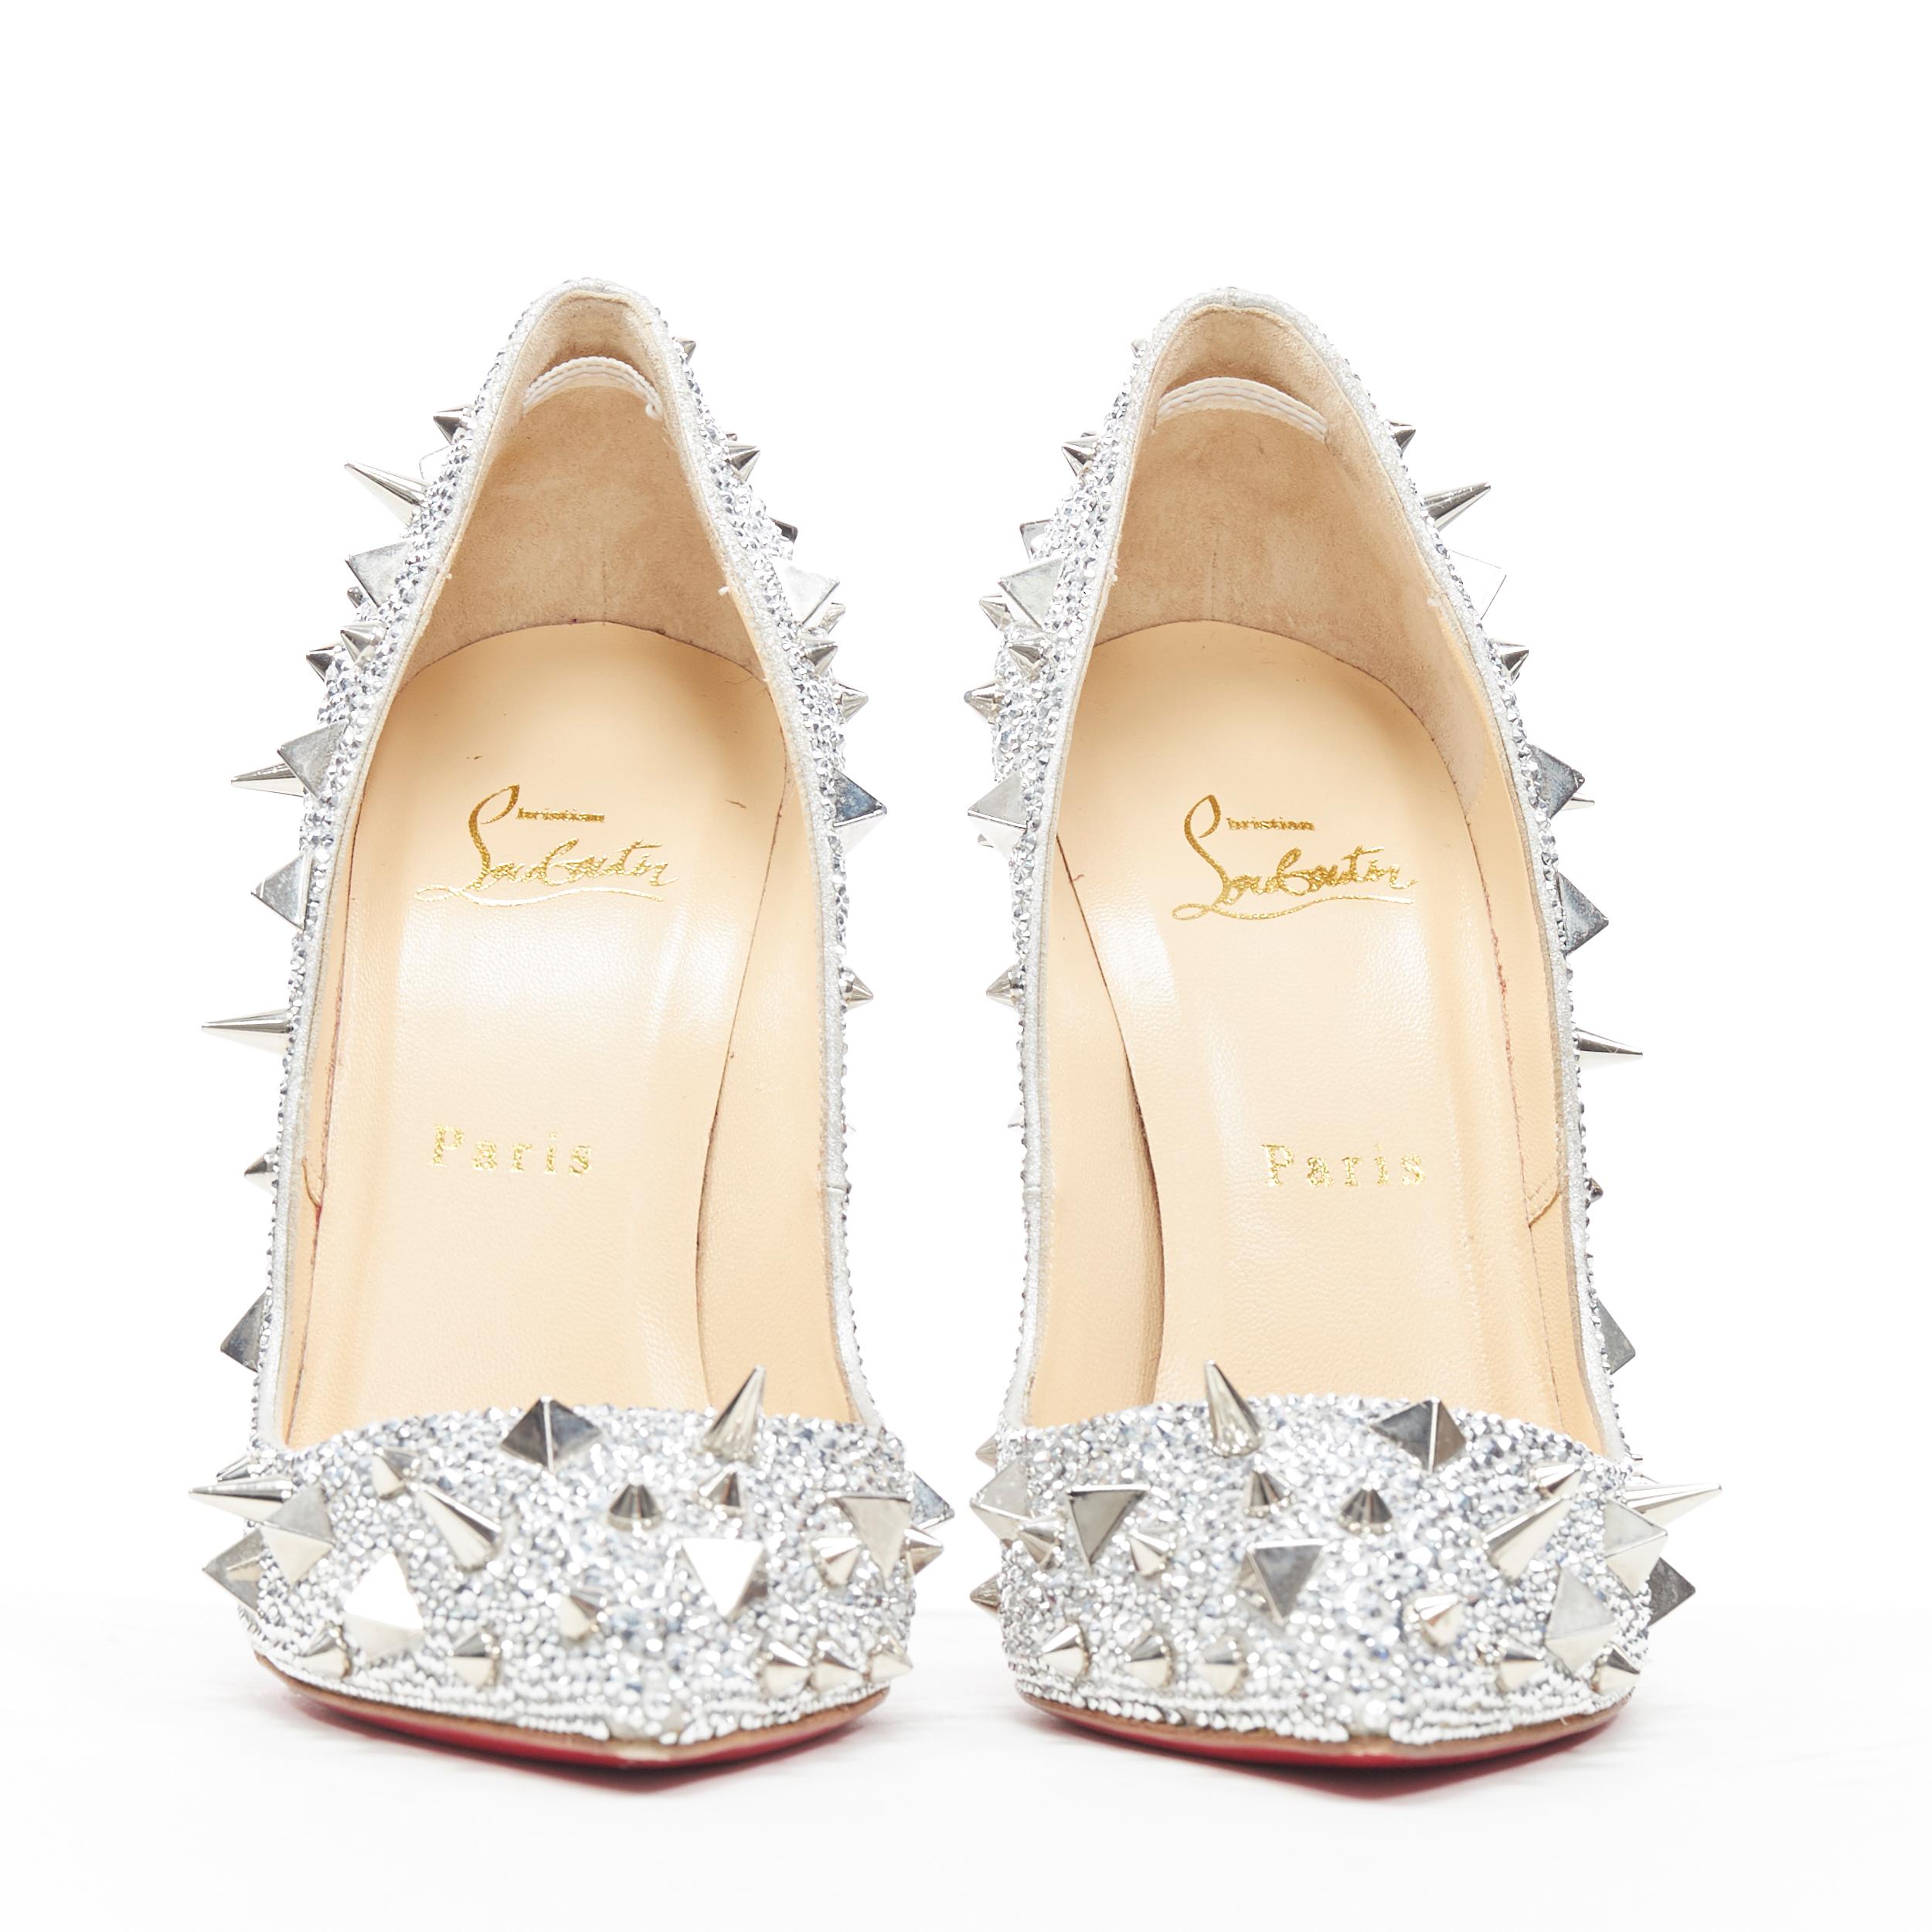 silver christian louboutin heels